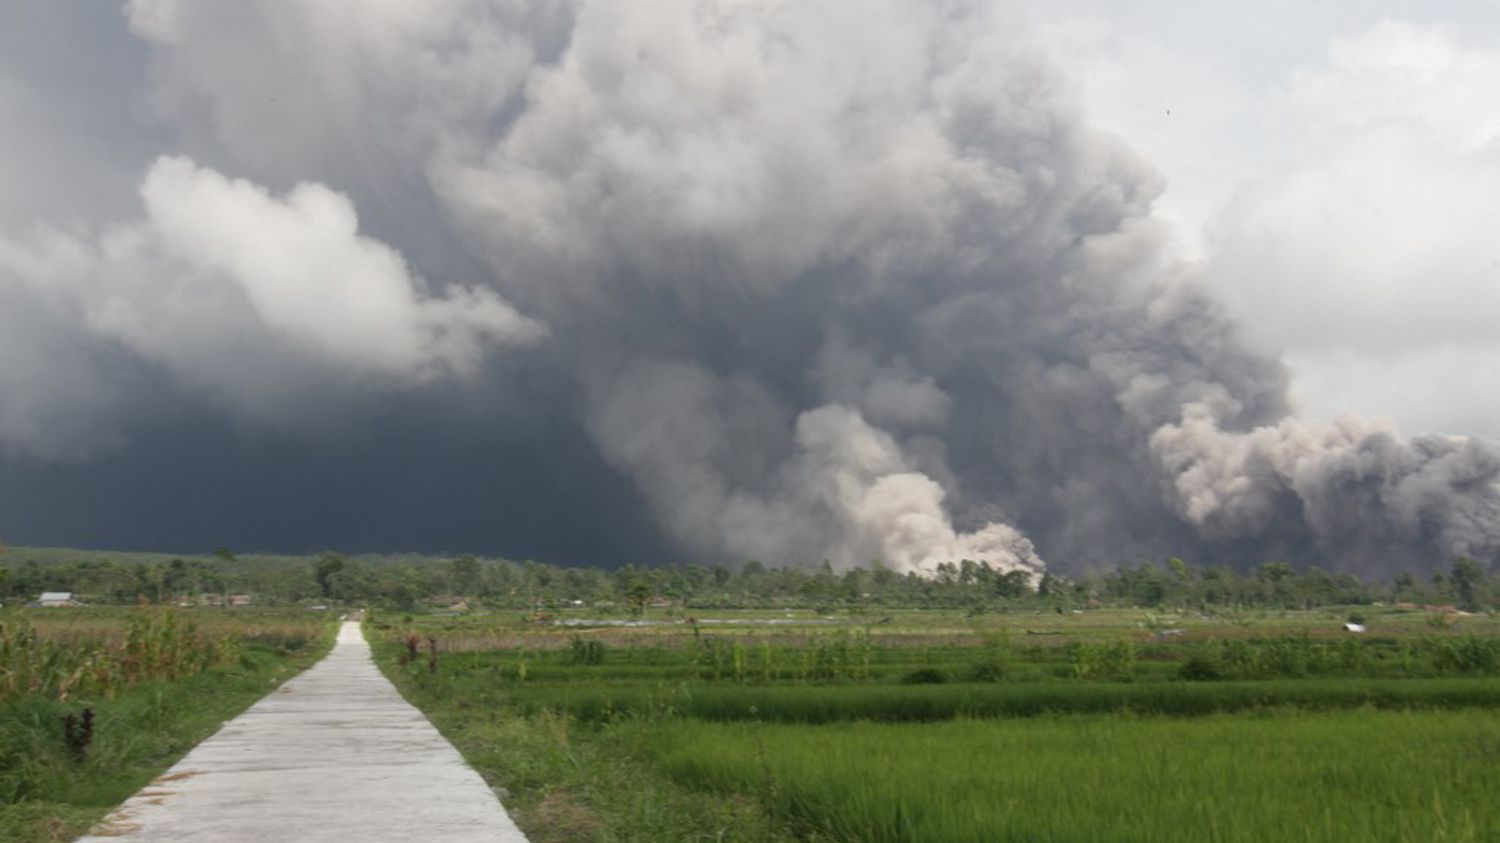 Indonesia: the Semeru volcano erupts, nearly 2,000 people evacuated
